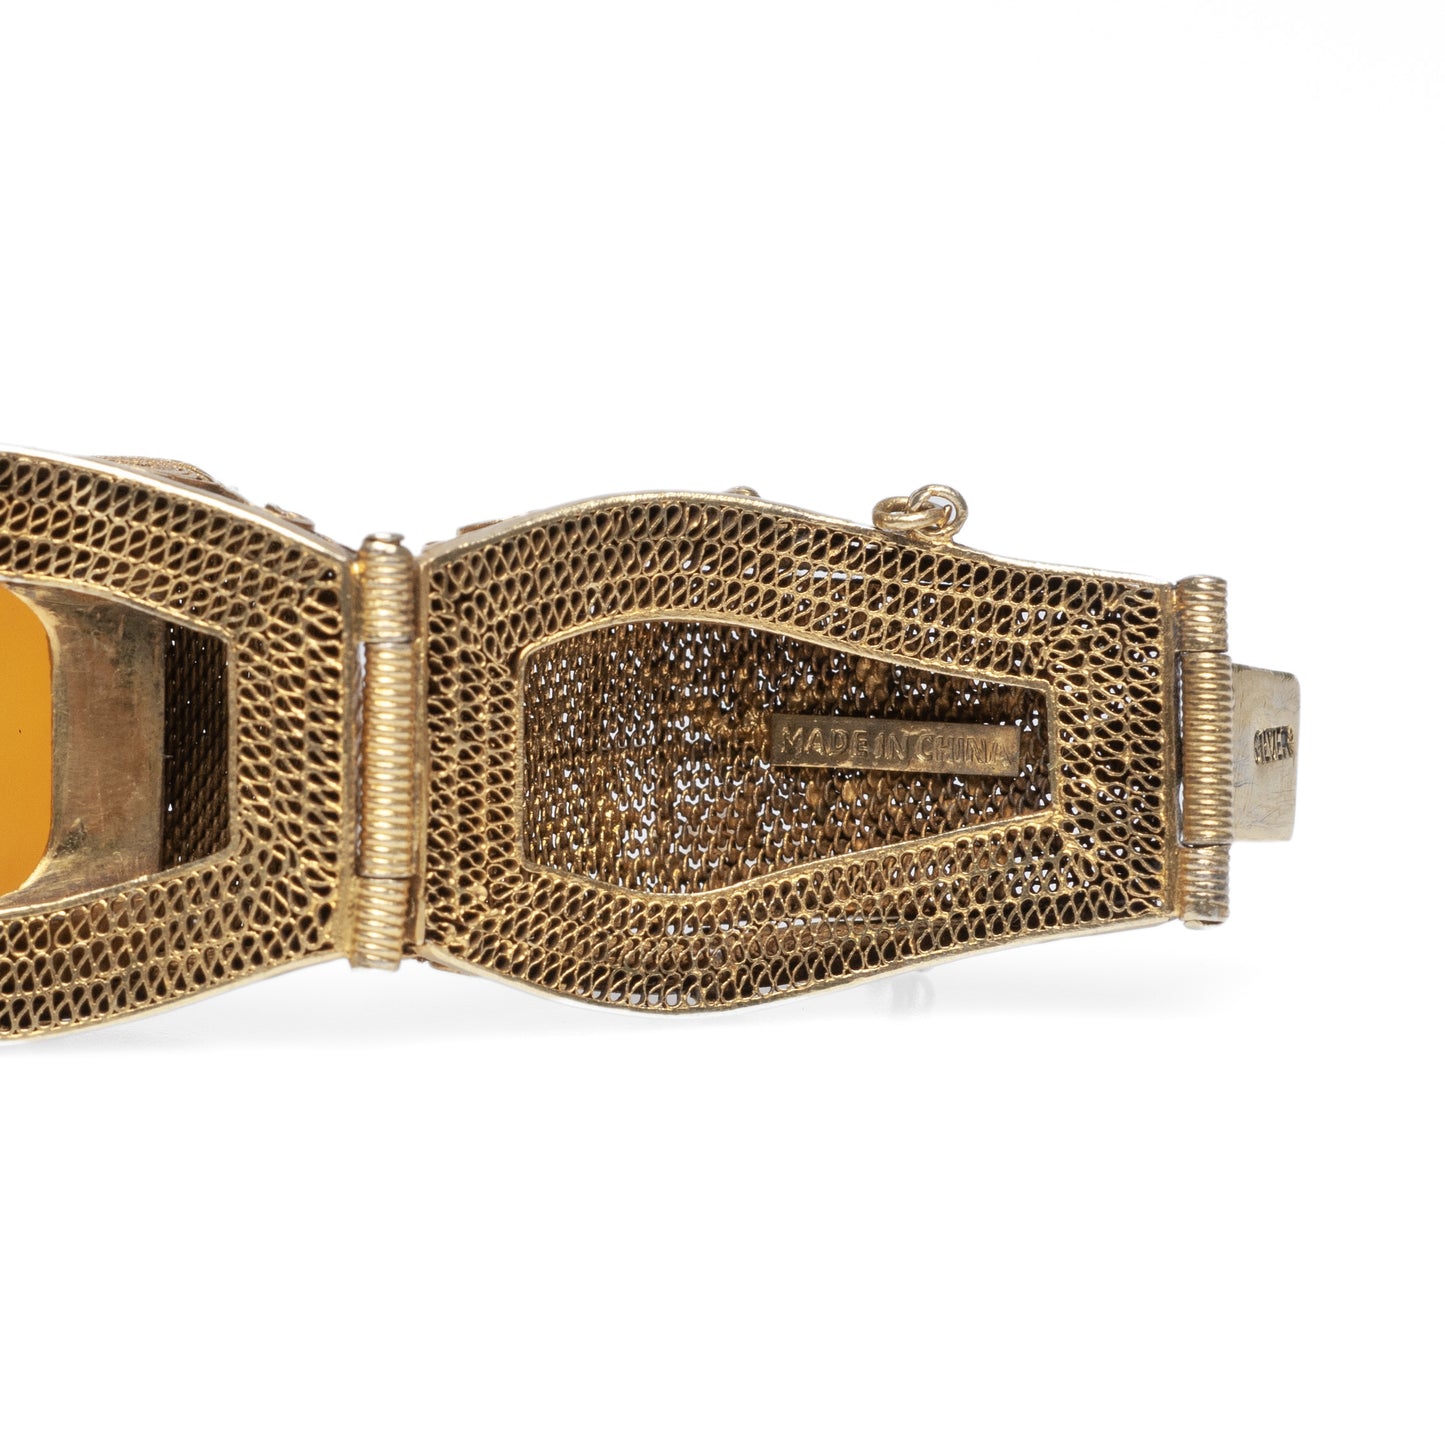 Chinese Silver Gilt & Carnelian Bracelet Filigree Design Vintage Republican  (Code A458)